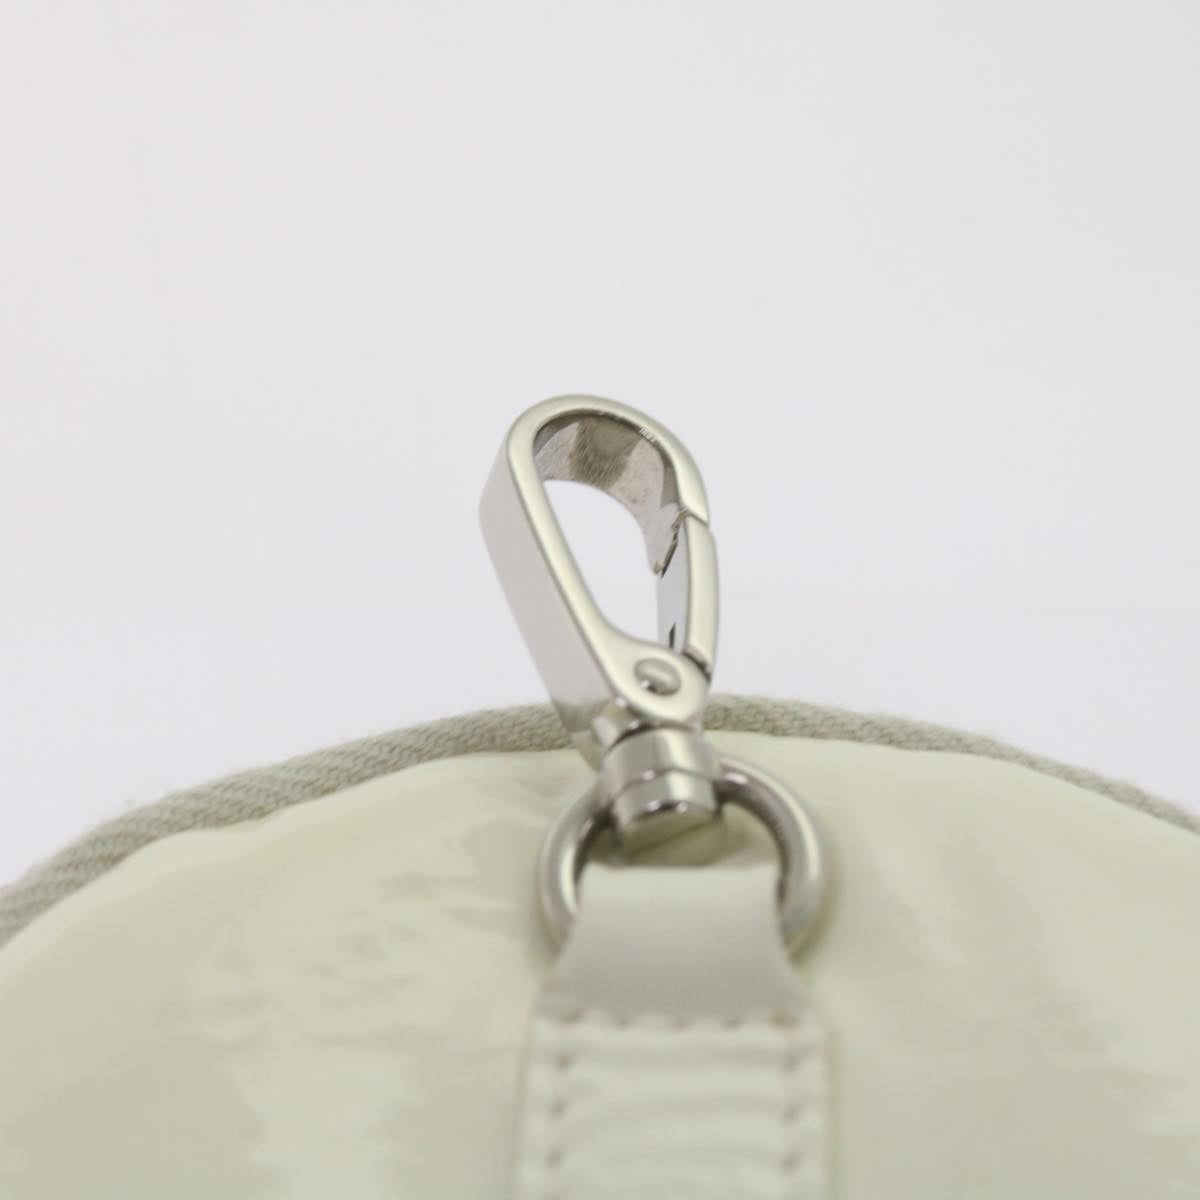 Miu Miu Shoulder Bag Enamel White Auth 66701